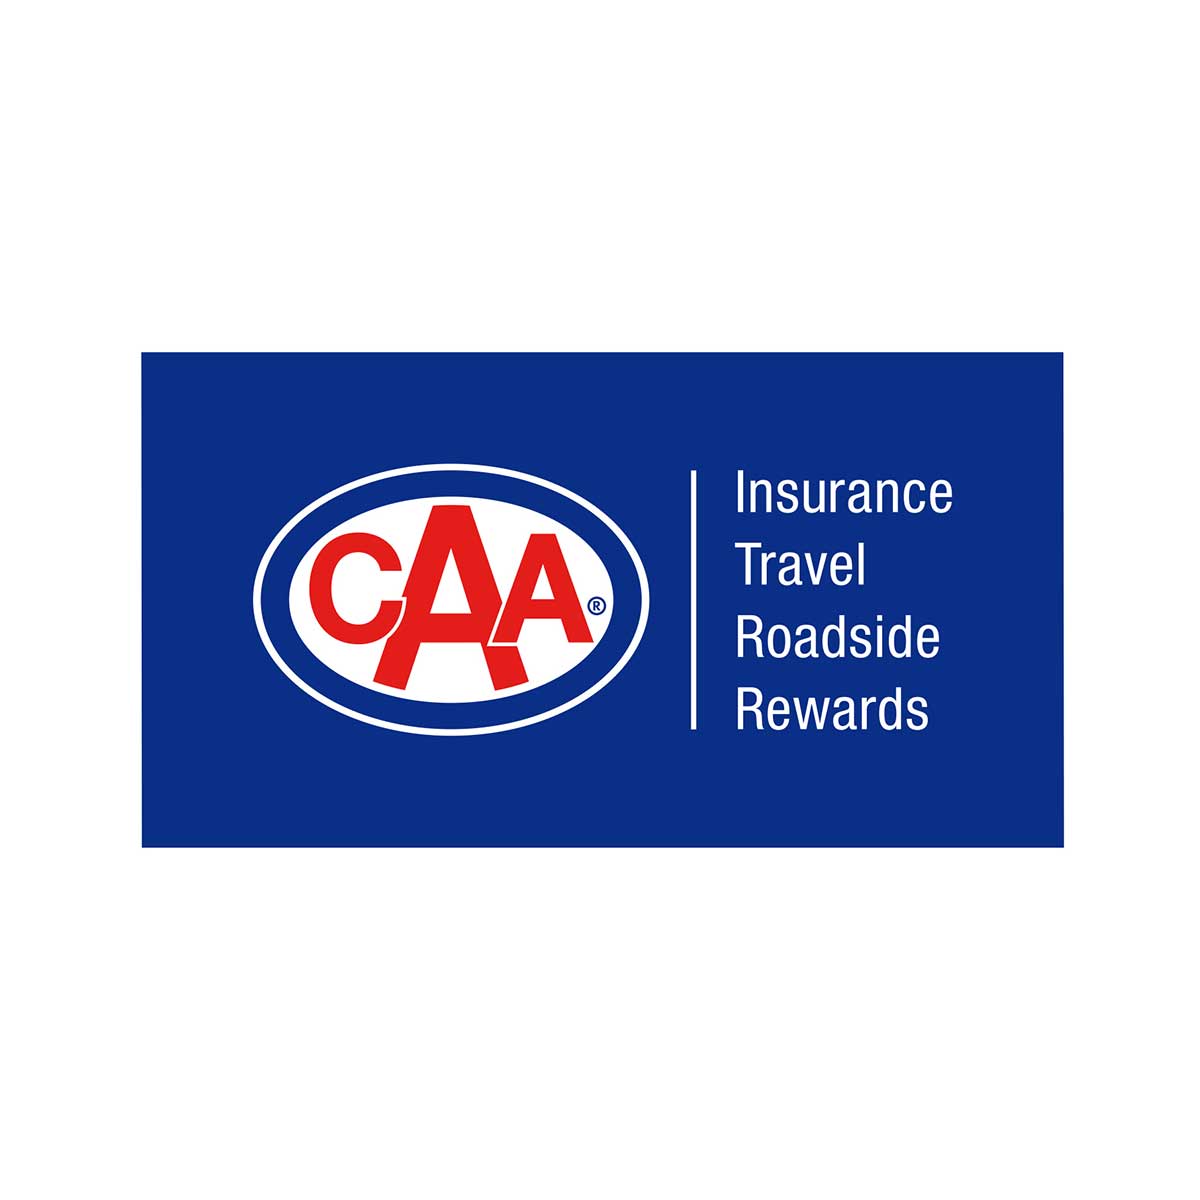 CAA - Insurance Travel Roadside Rewards